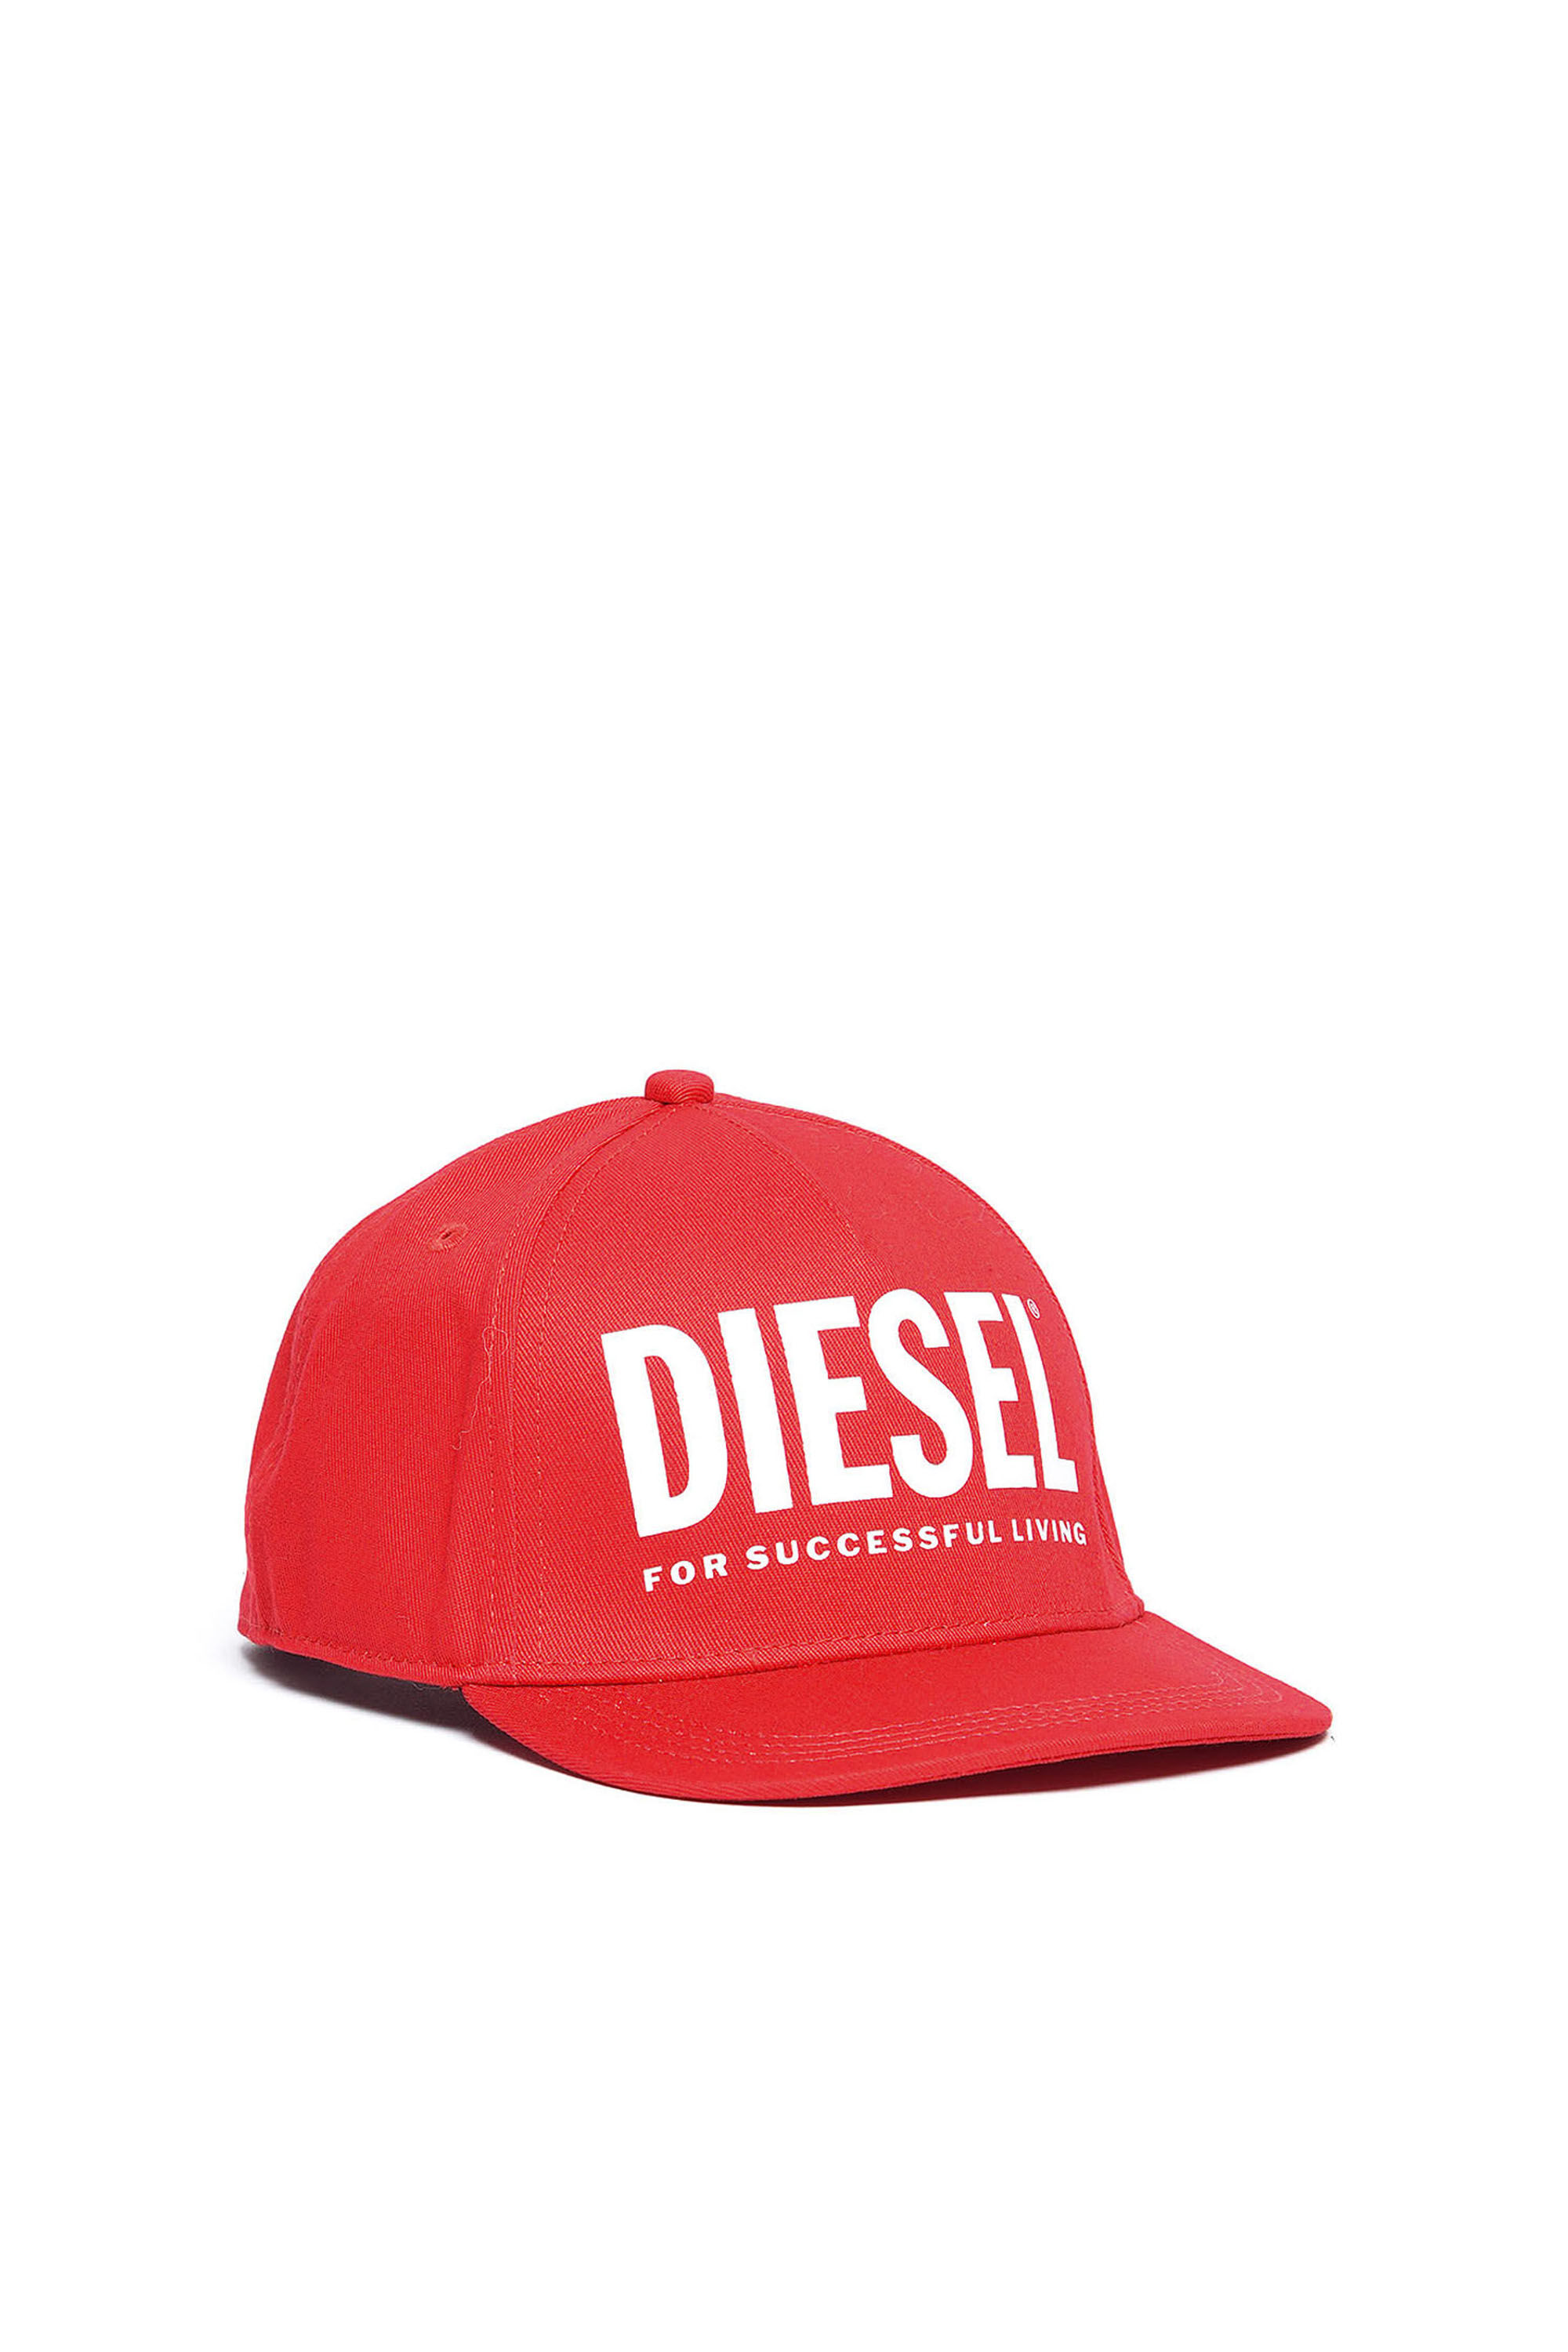 Diesel - FOLLY, Red - Image 1